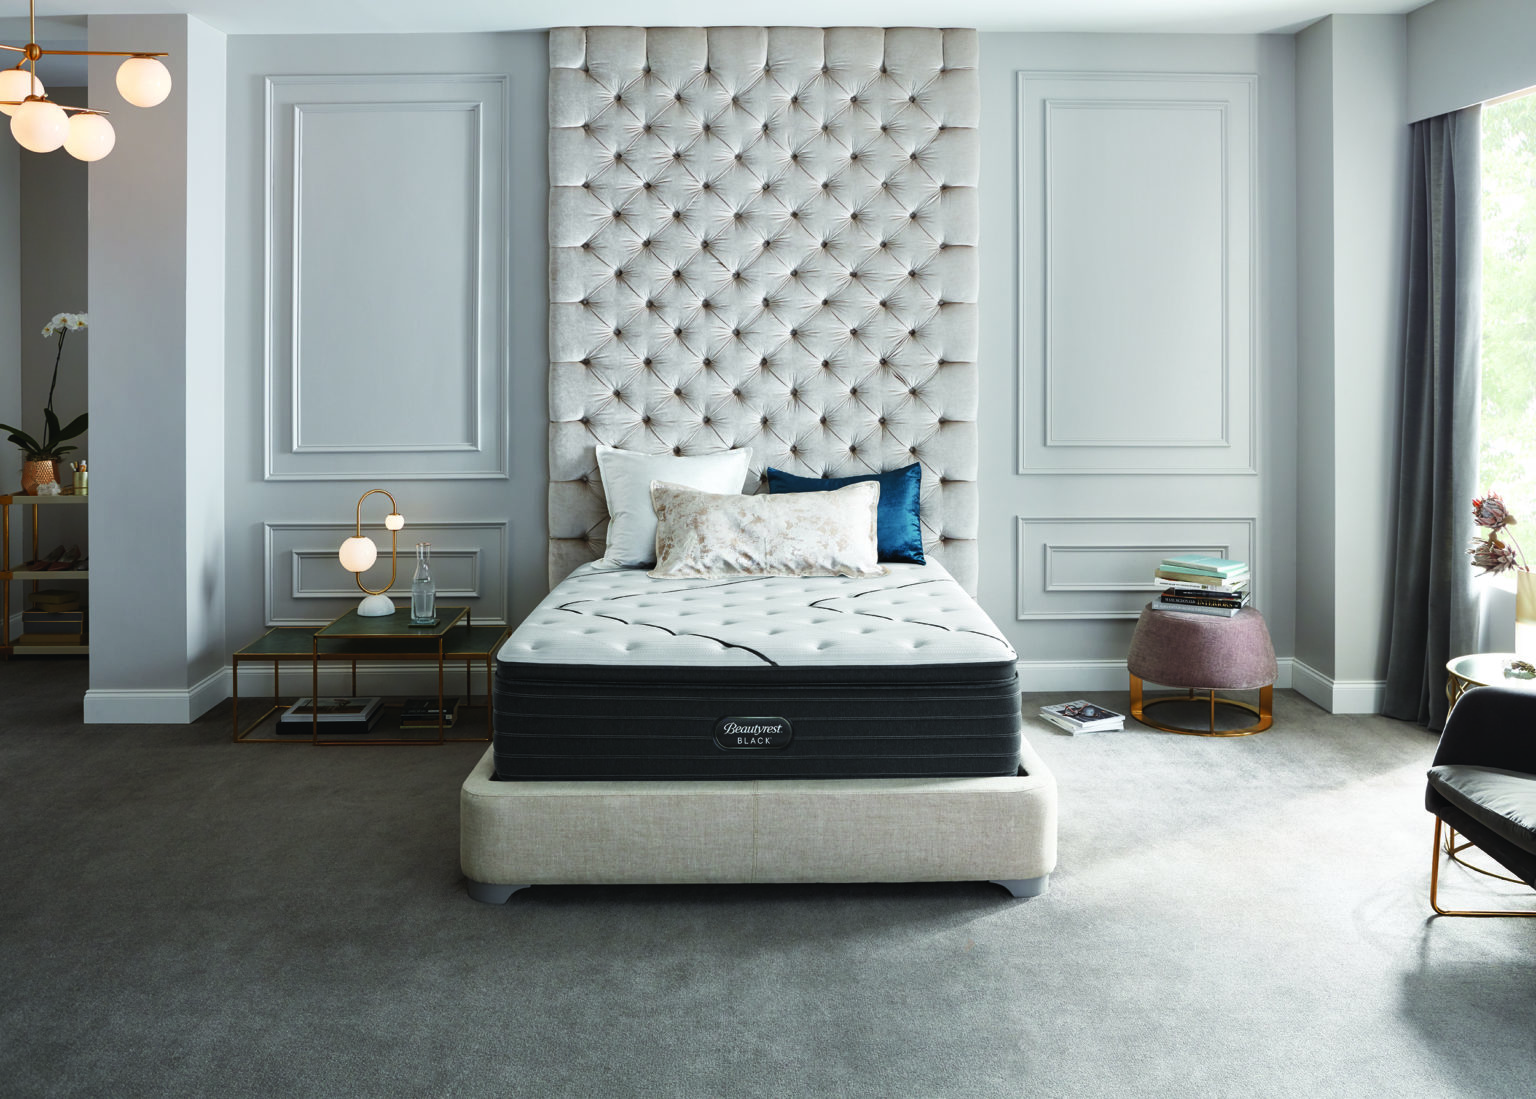 burlington mattress company reviews